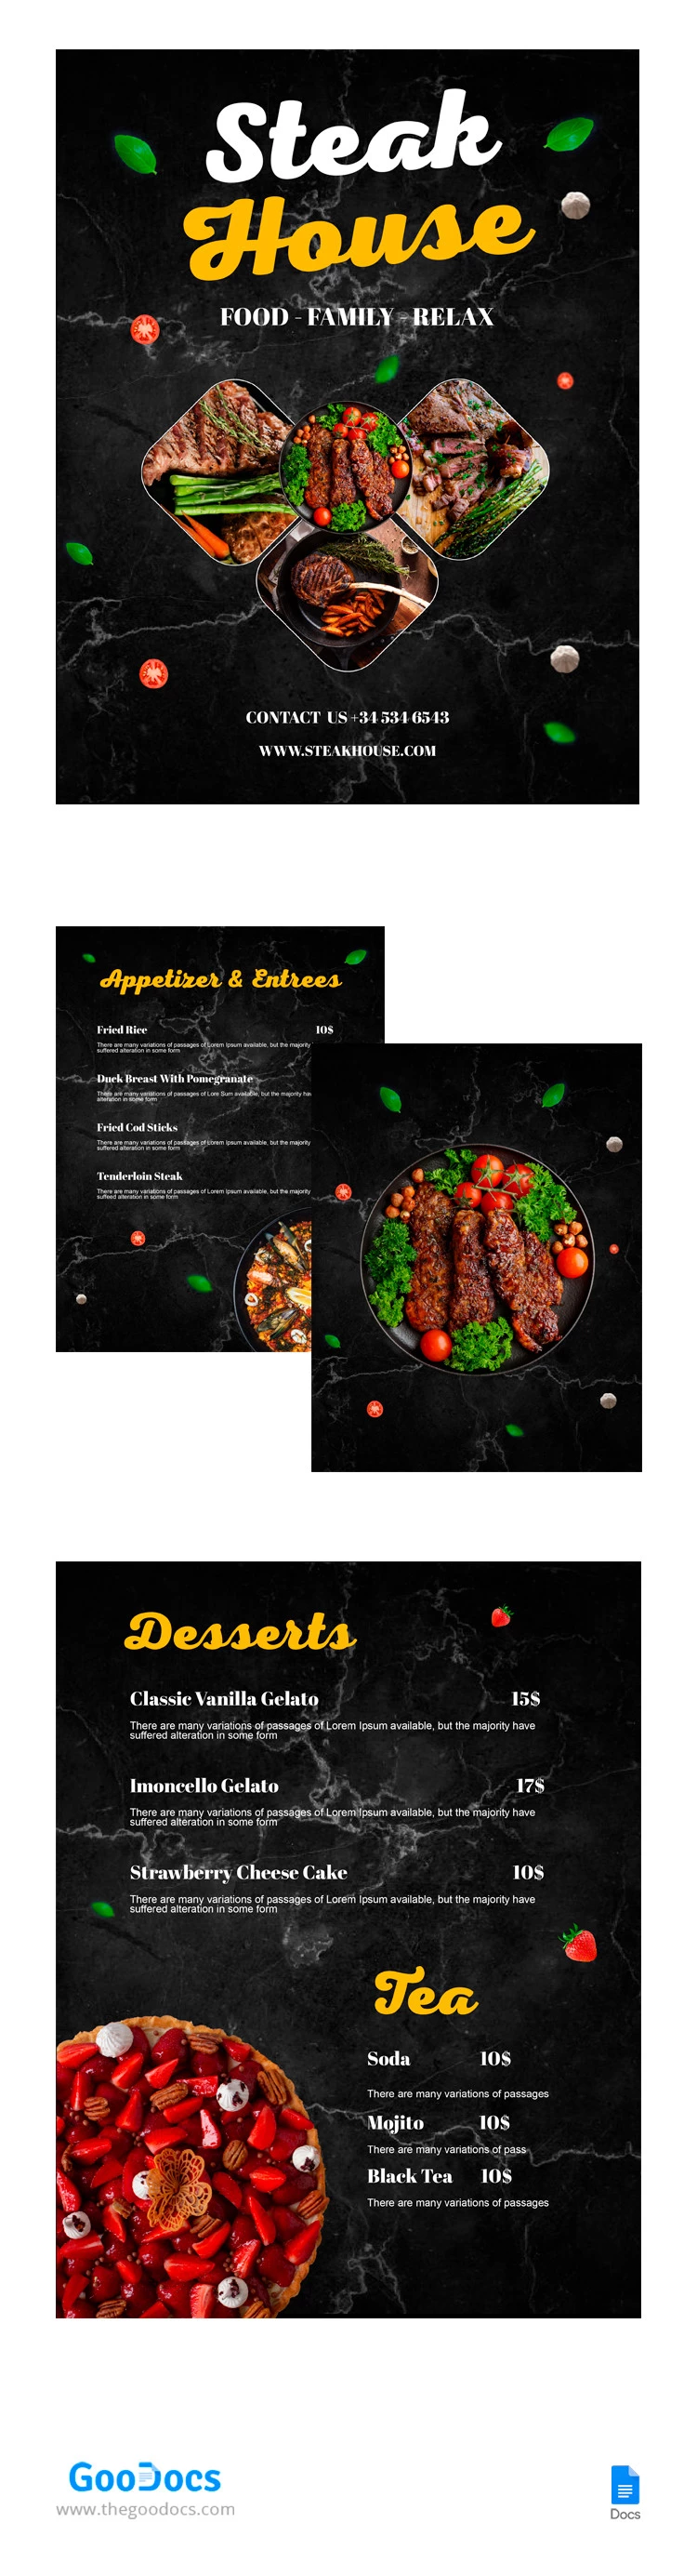 Steakhaus Speisekarte - free Google Docs Template - 10065320